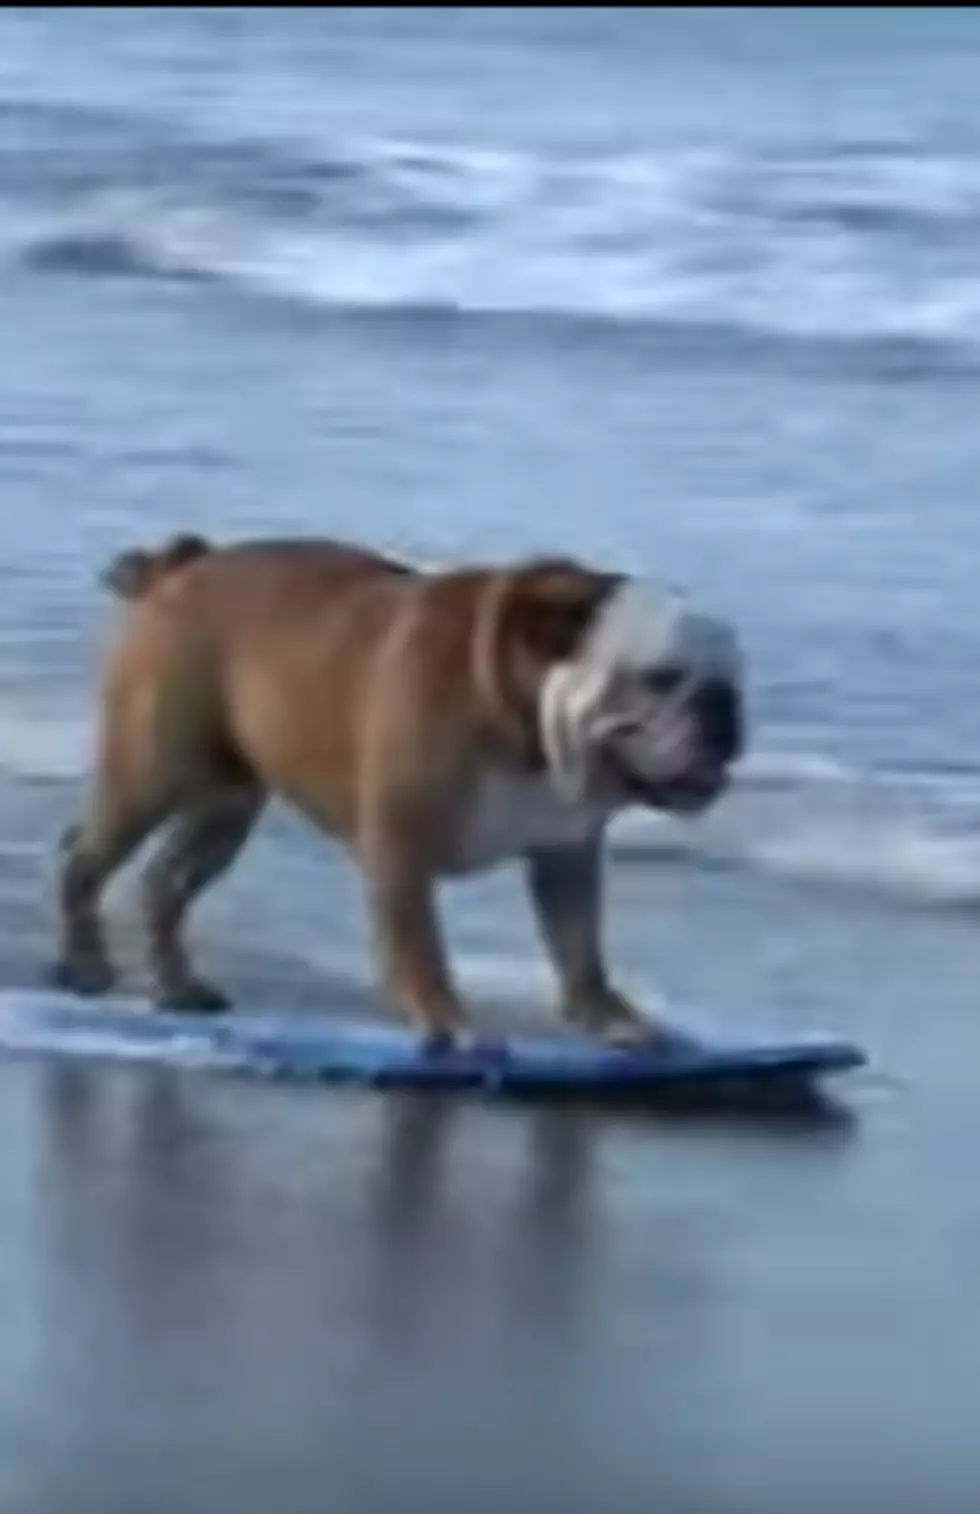 RIP Skateboarding Bulldog [VIDEO]